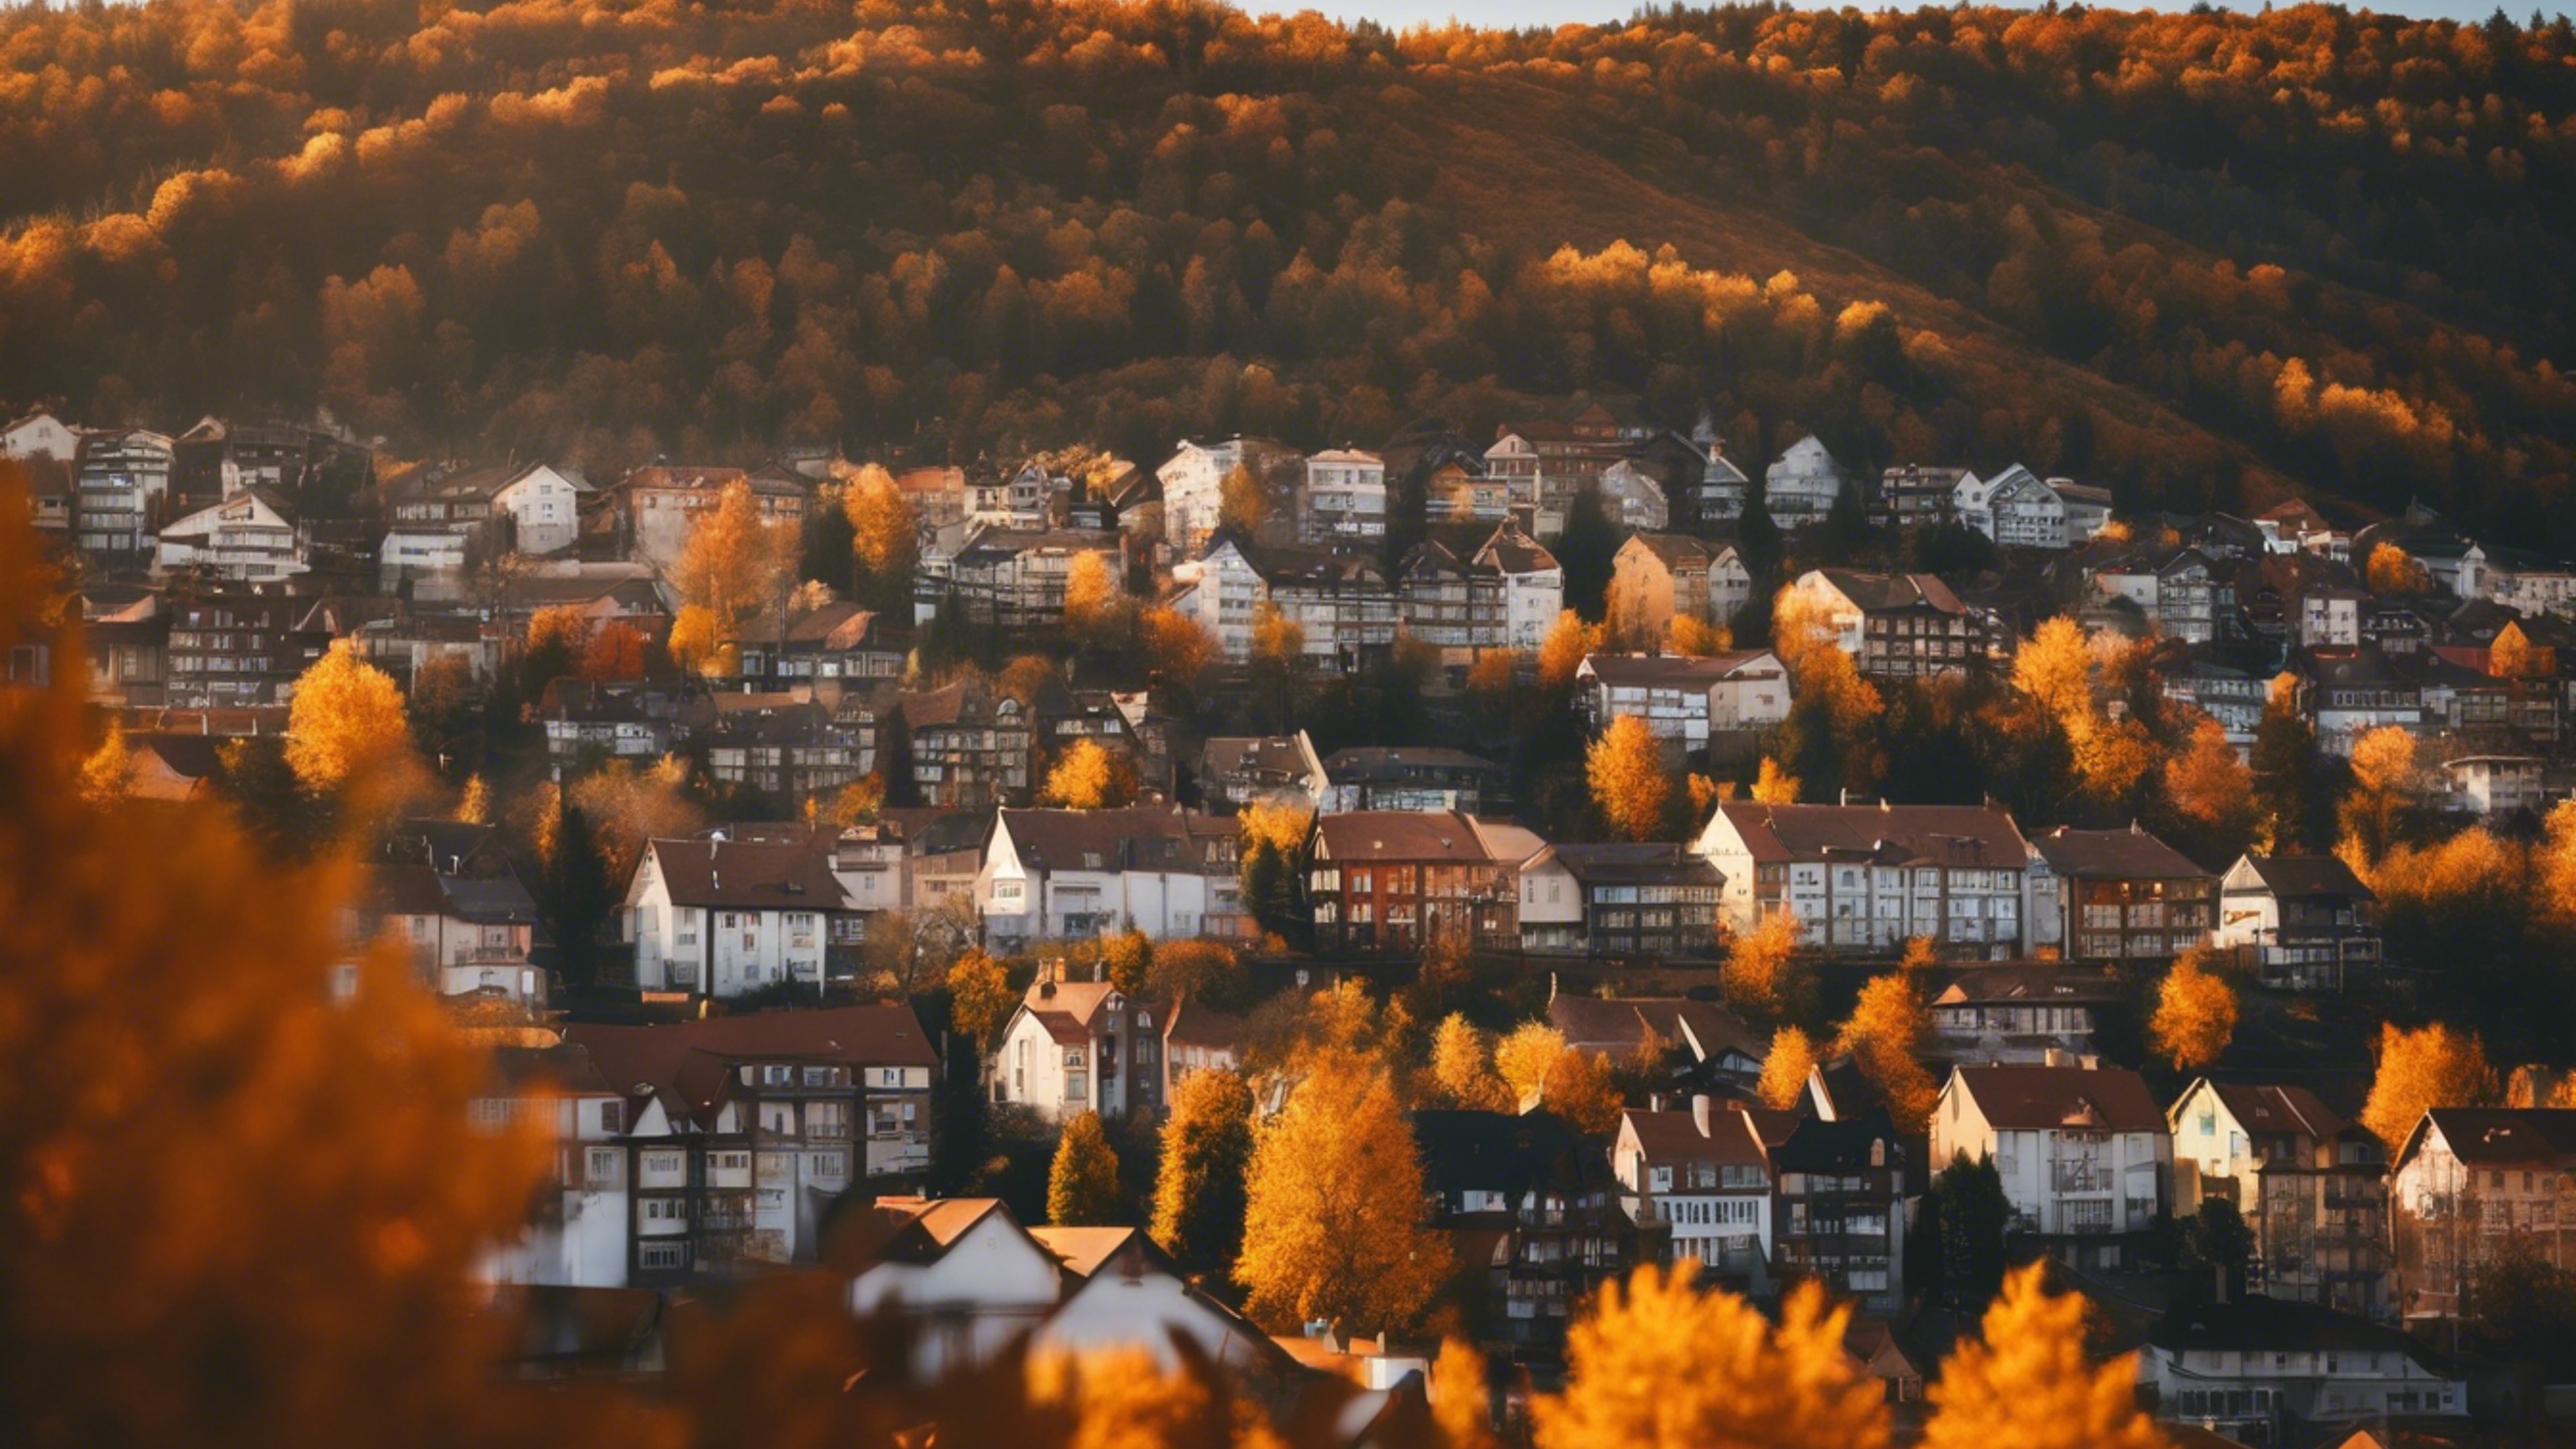 A calm skyline view of a mountain town in autumn, dappled in hues of orange and gold. Wallpaper[cb2d4b5eada64efeb989]